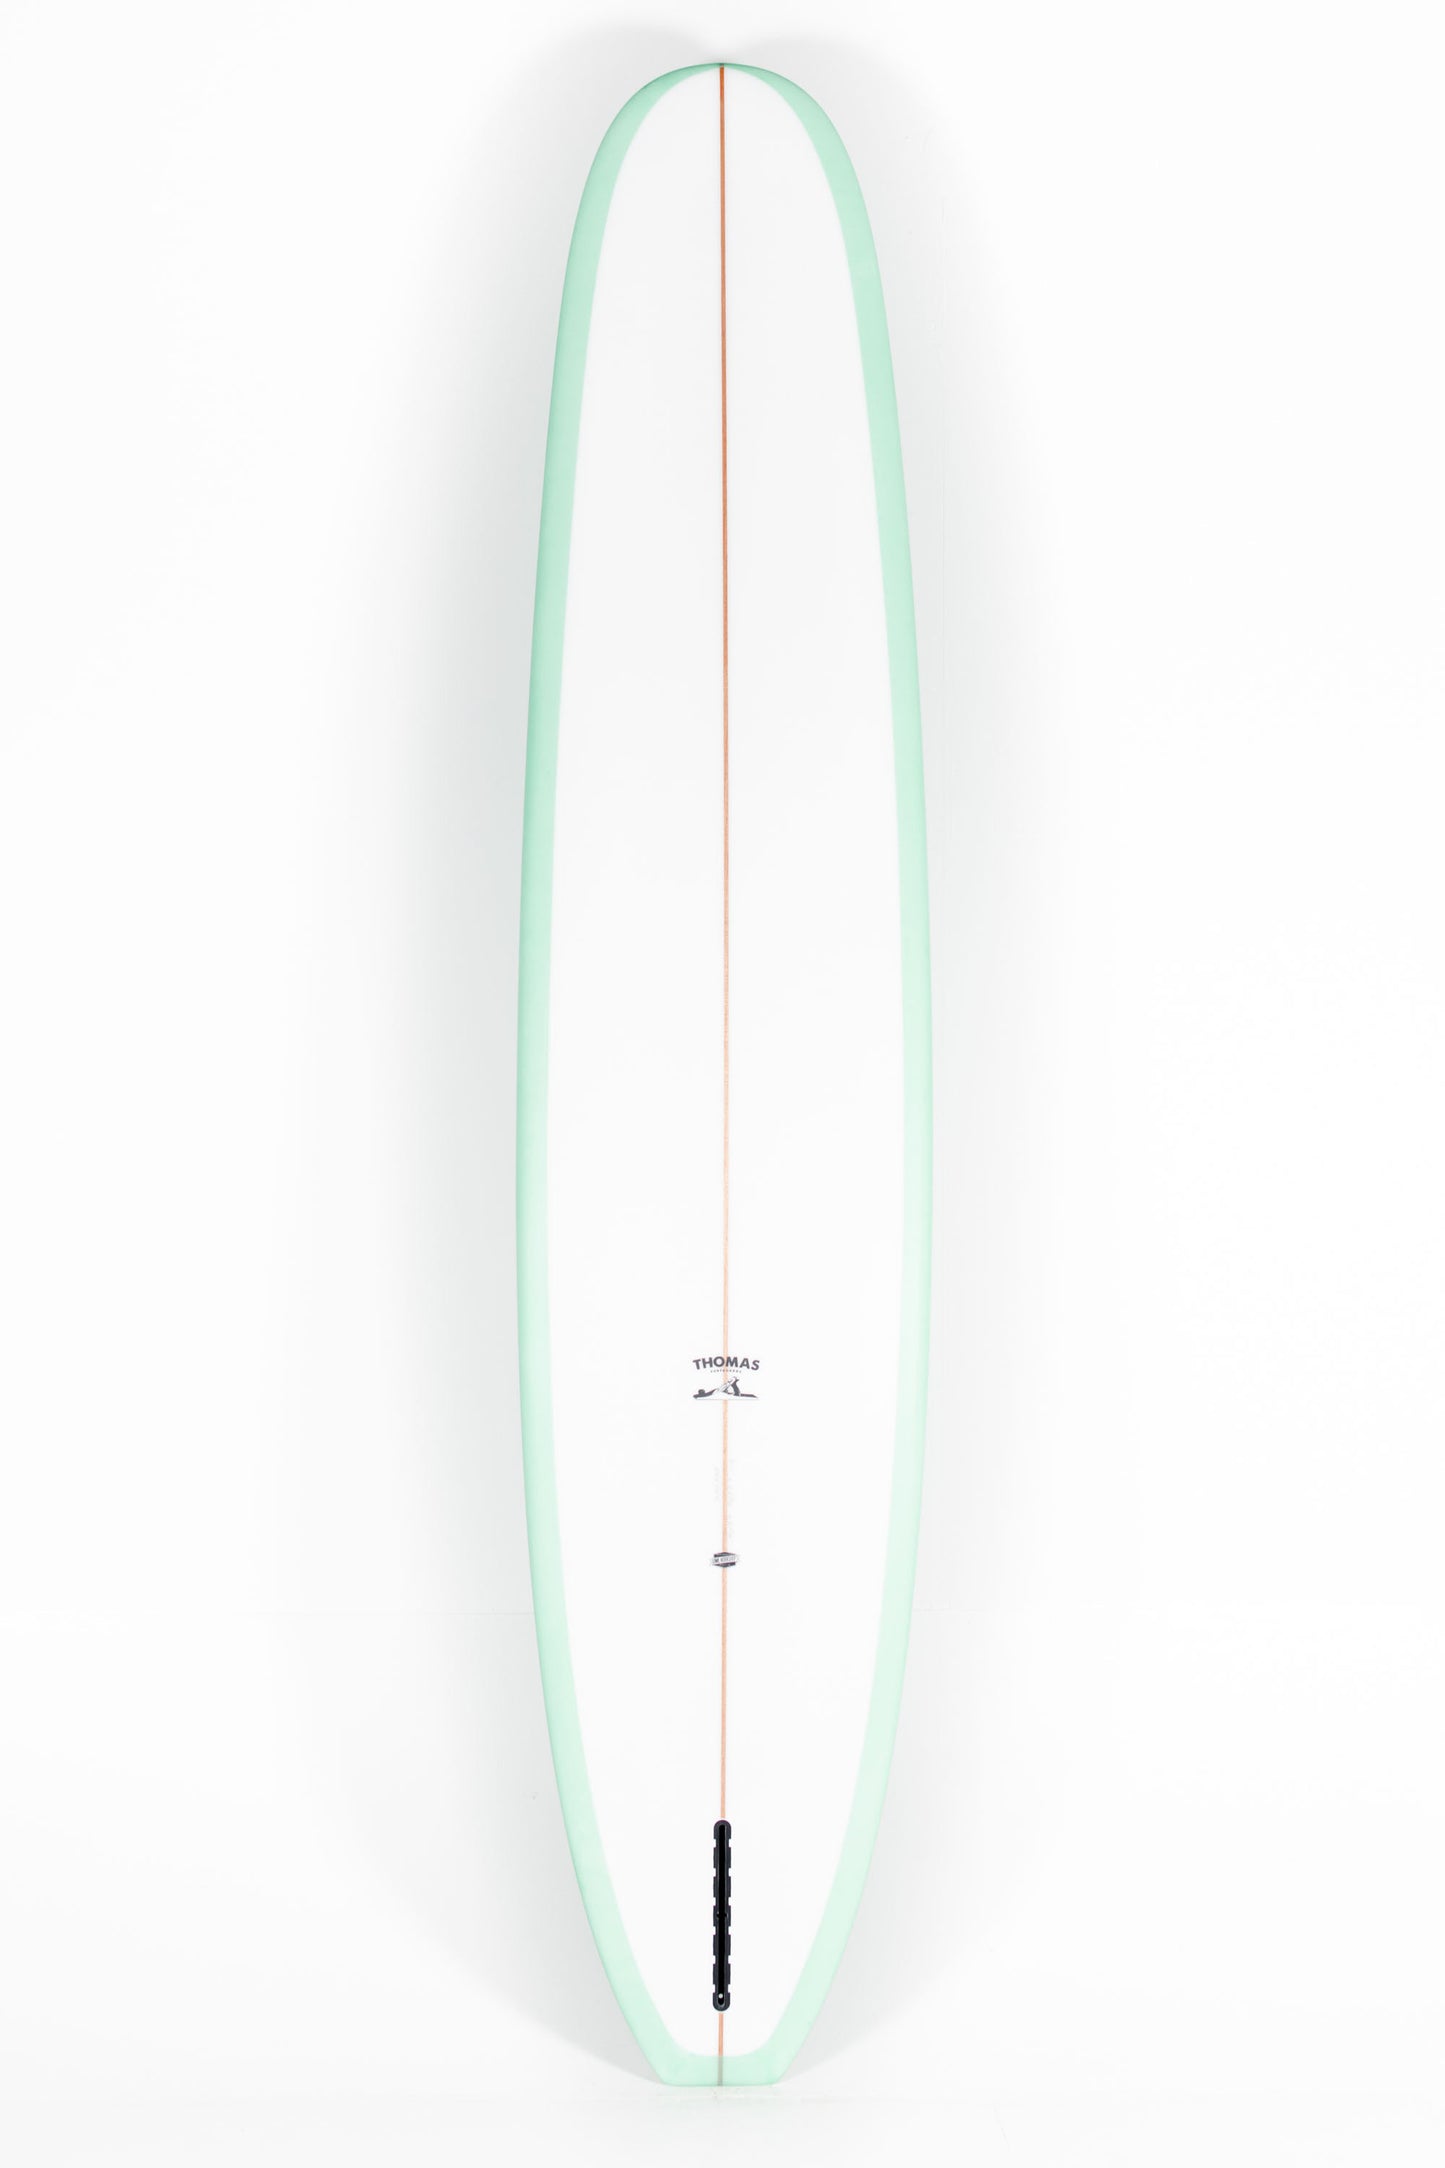 Pukas Surf Shop - Thomas Surfboards - KEEPER - 9'7"x 23 1/16 x 3 1/16 x 3 - Ref. KEEPER97